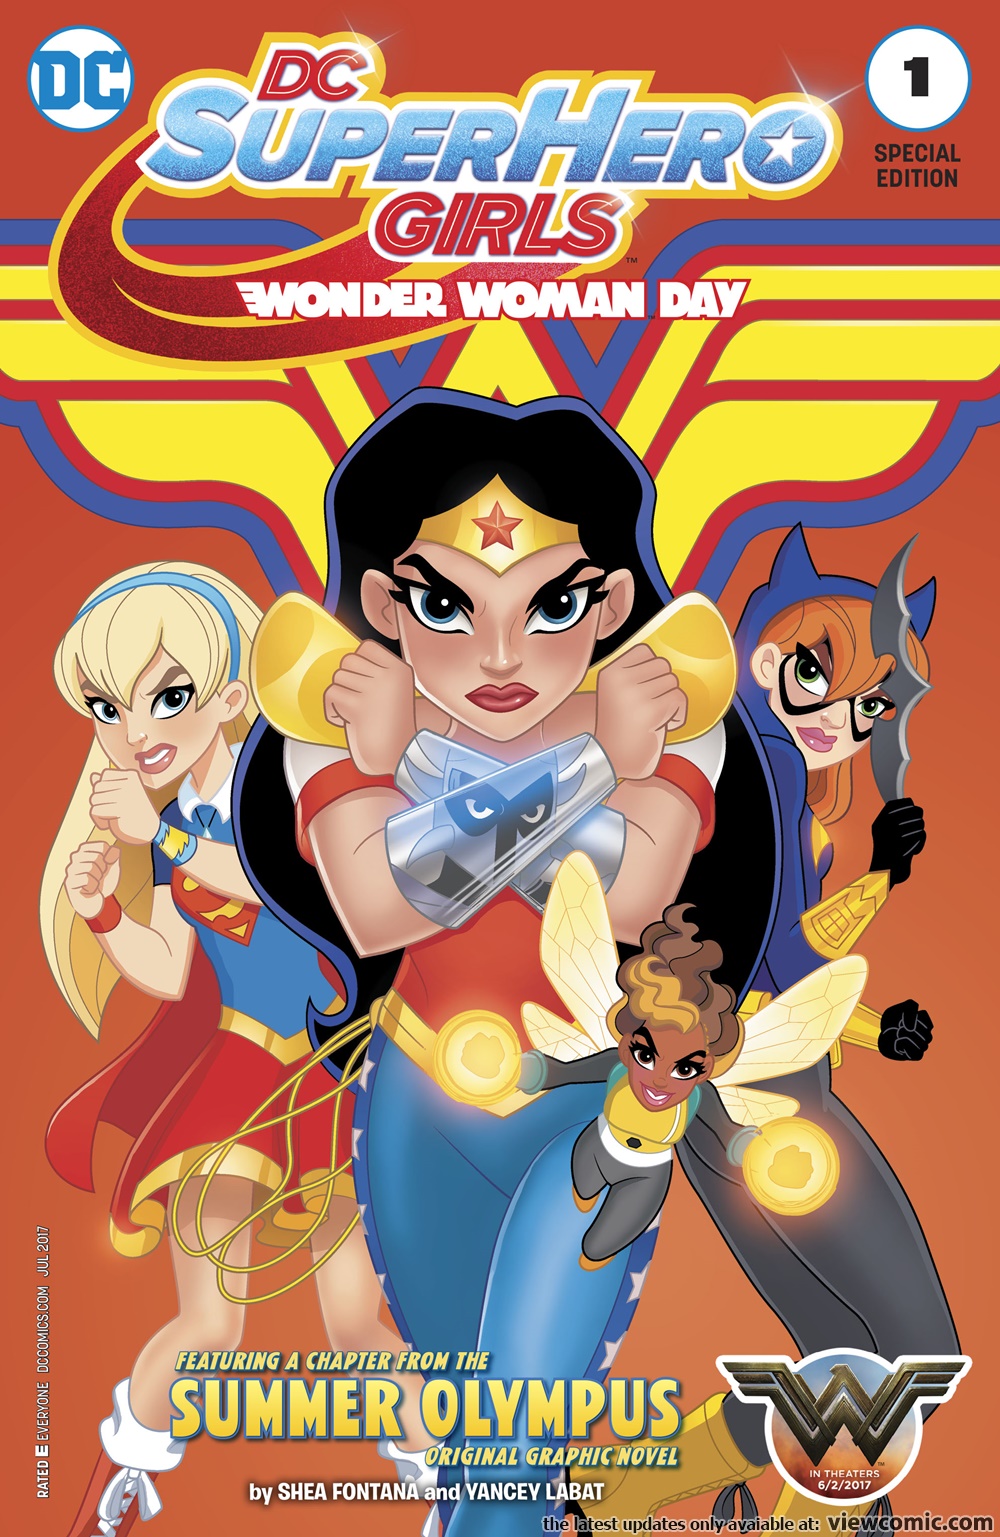 Super Hero Girls Porn - DC Super Hero Girls Wonder Woman Day Special Edition 001 (2017 ...